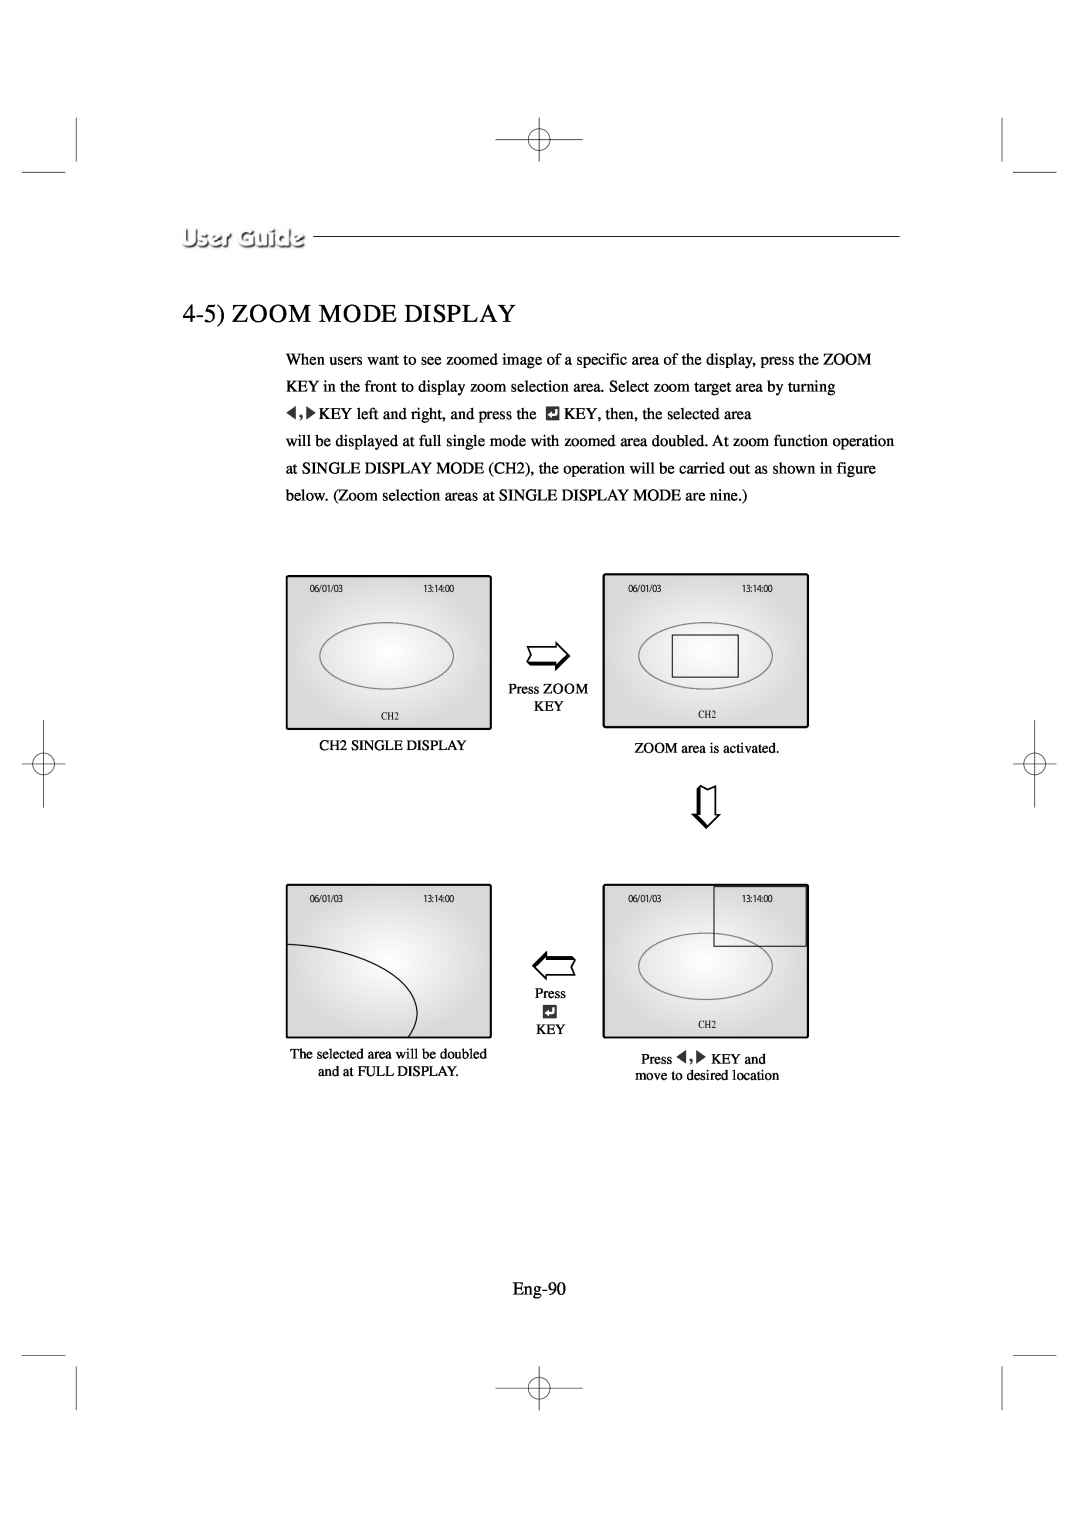 Samsung SSC17WEB manual 4-5ZOOM MODE DISPLAY, Eng-90 